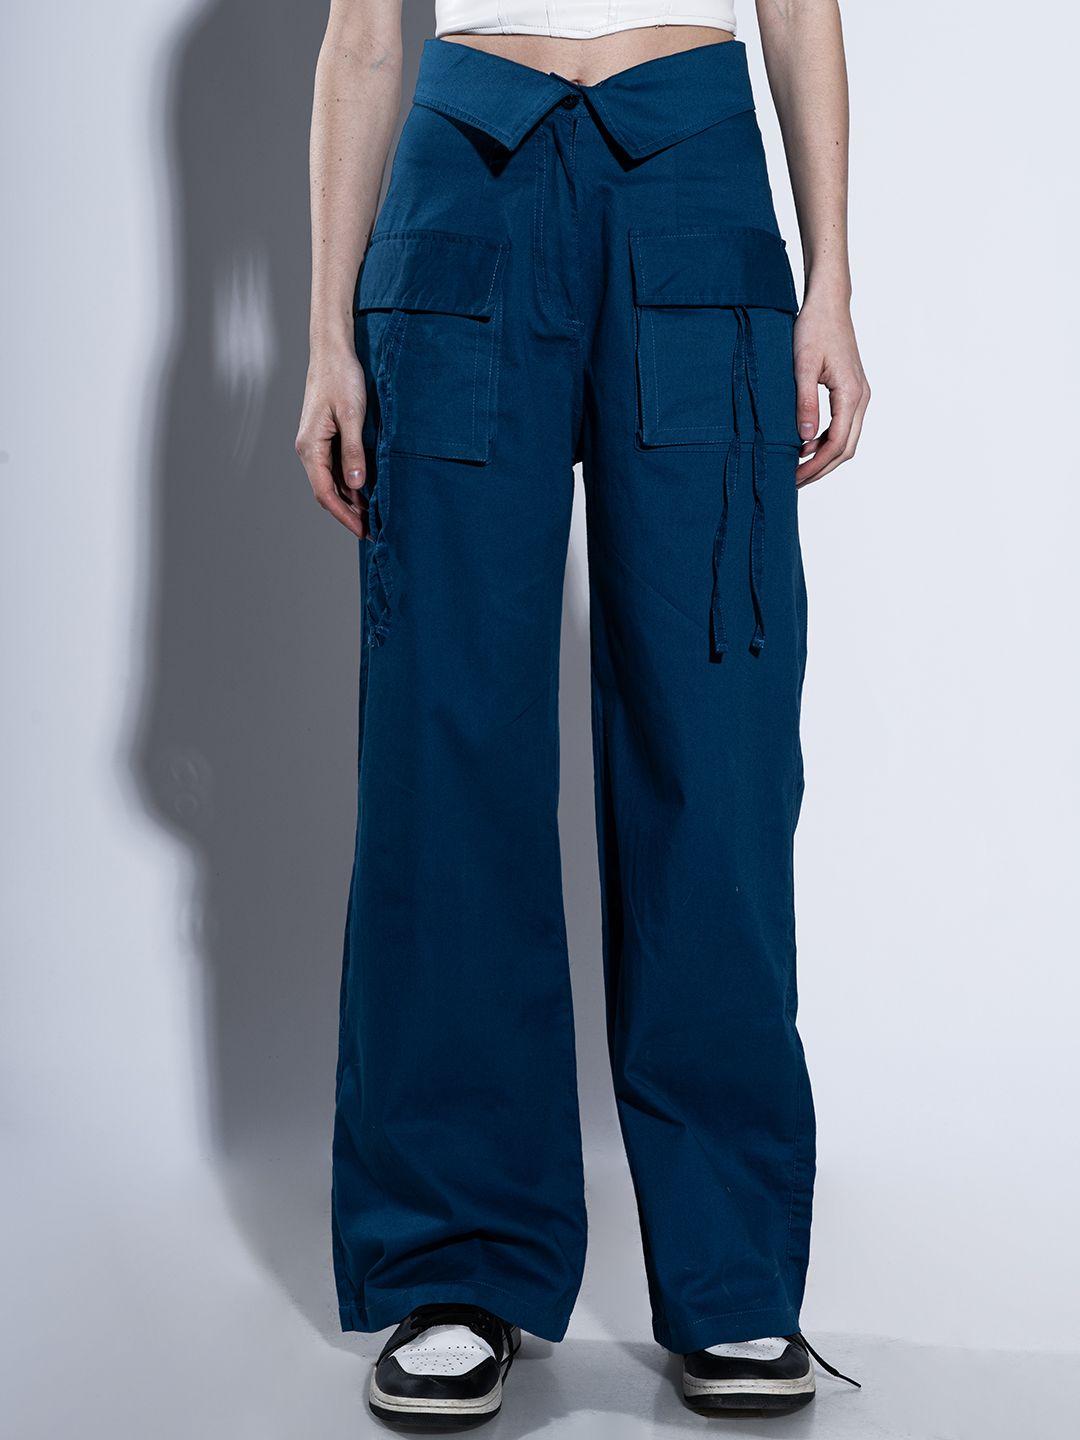 stylecast-x-hersheinbox-women-high-rise-cargo-trousers